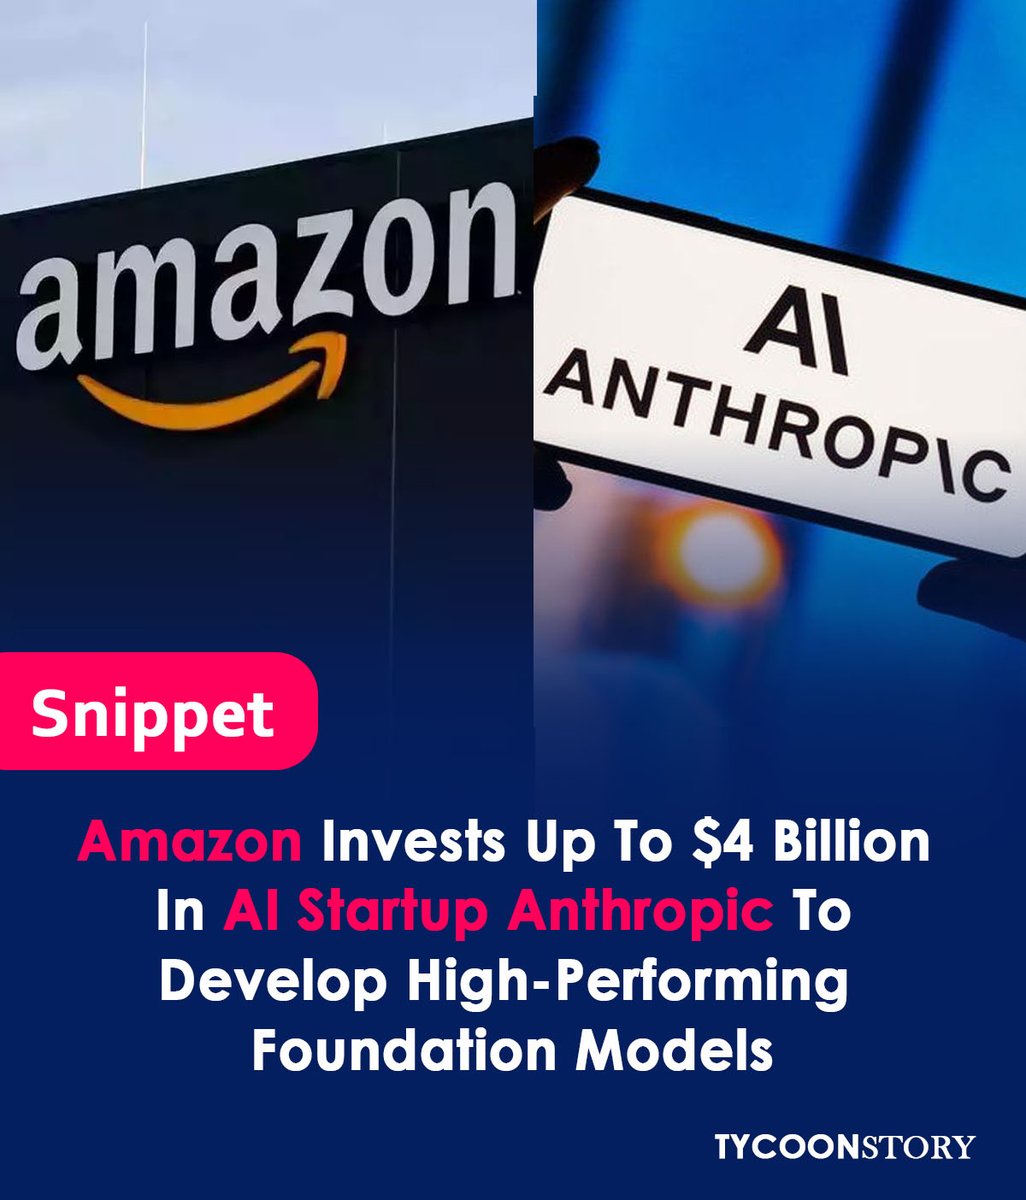 Amazon commits up to $4 billion to AI startup Anthropic to advance high-performing foundation models
#business #collaboration #Anthropic #cloudtechnologies #development #AWS #generativeAI #ArtificialIntelligence  #CloudComputing #Innovation #Partnership  @AnthropicAI @amazon